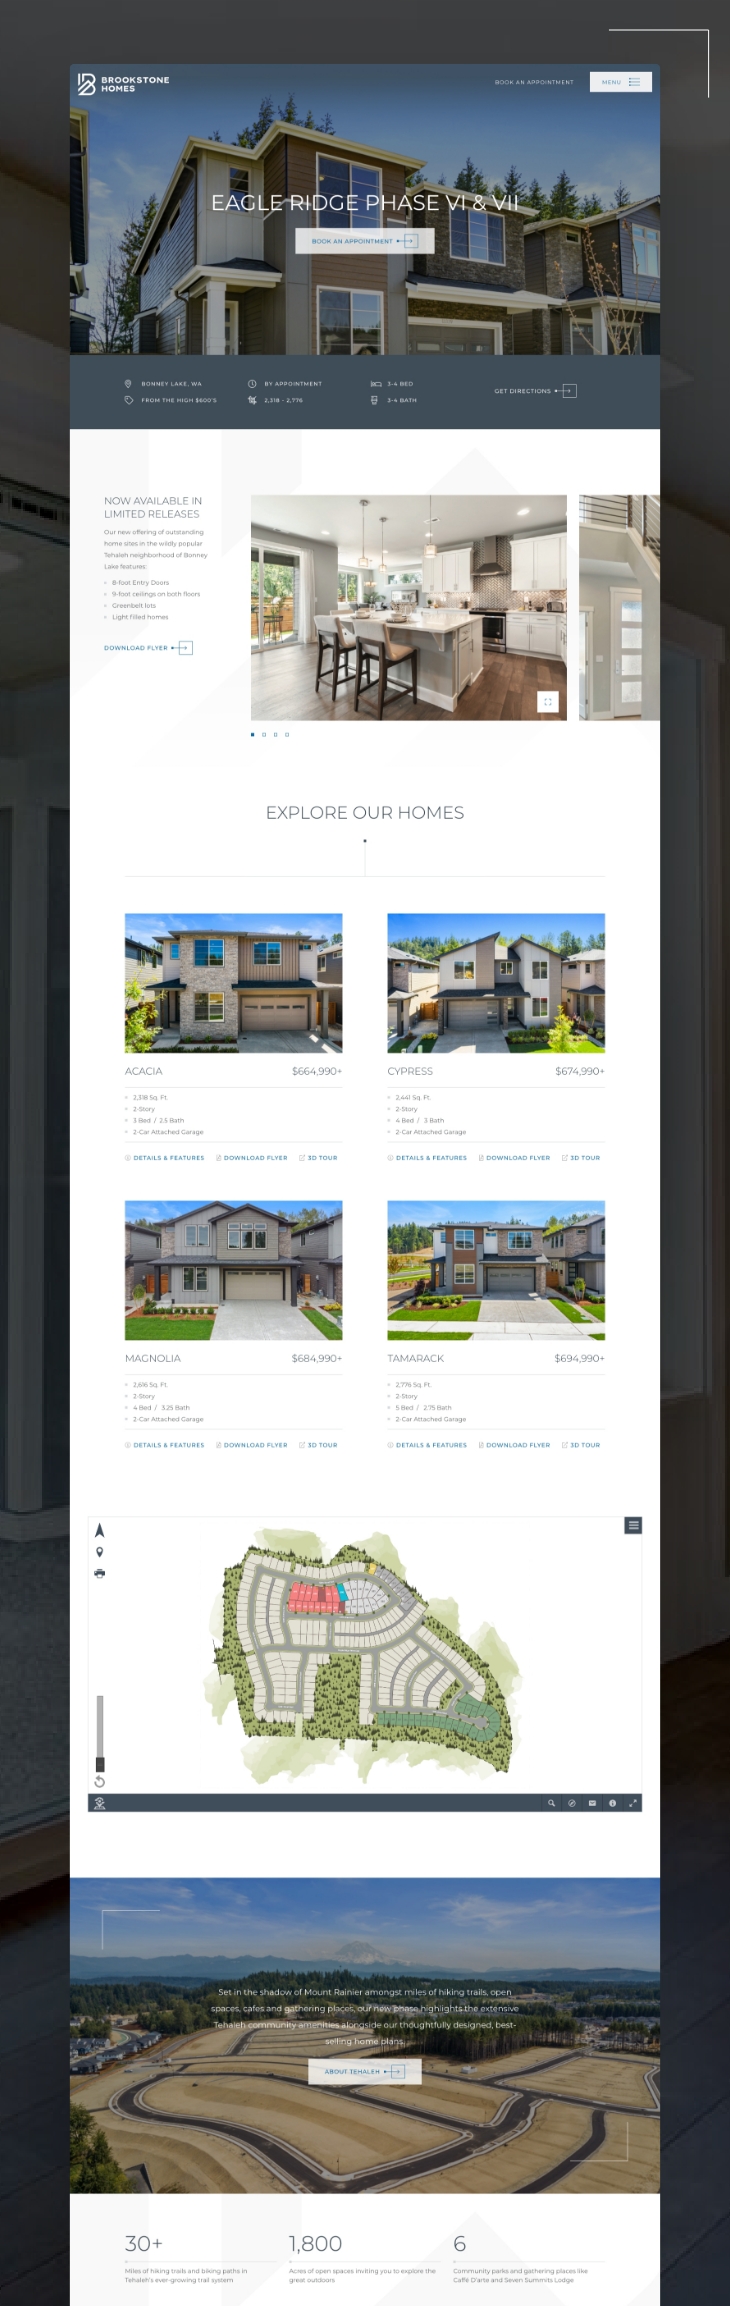 aec-website-redesign-for-brookstone-homes---blog-asset-3.jpg